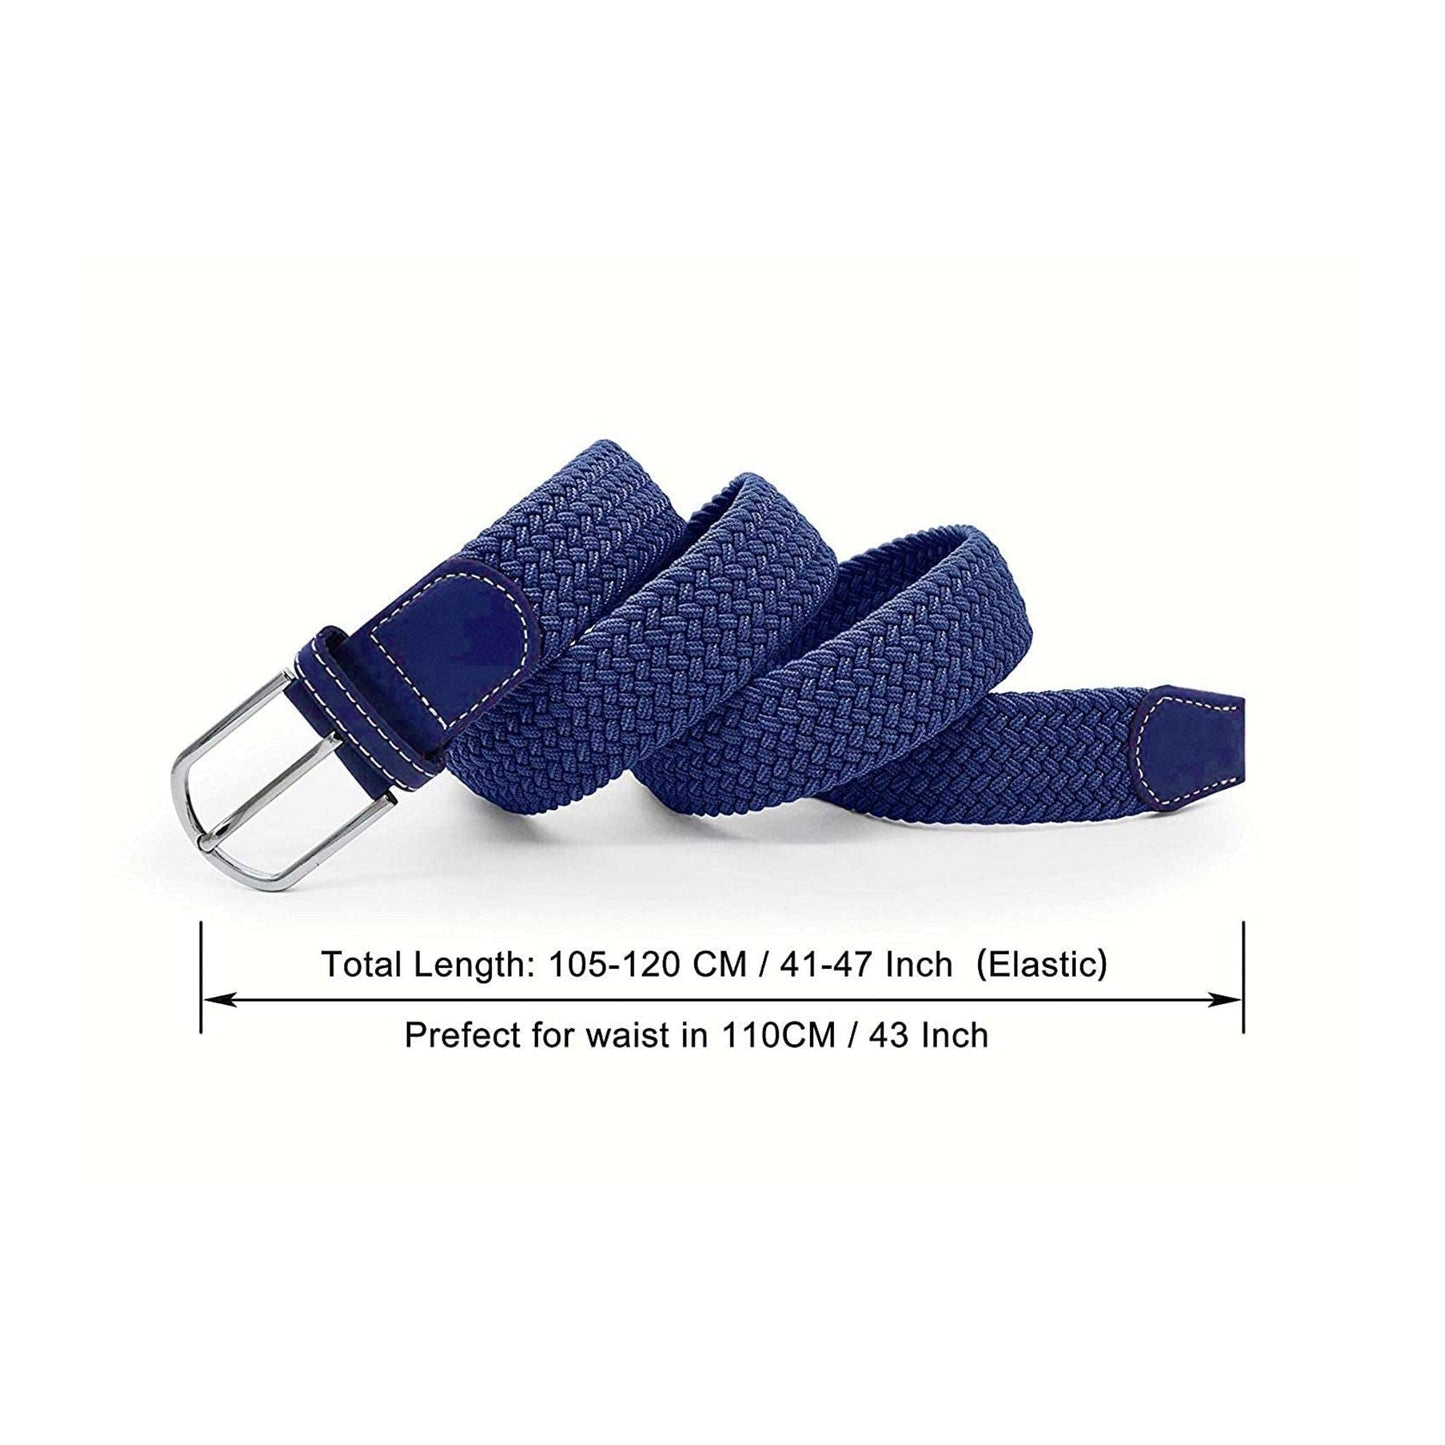 YOUTH ROBE Women's Belt (Blue) - YOUTH ROBE